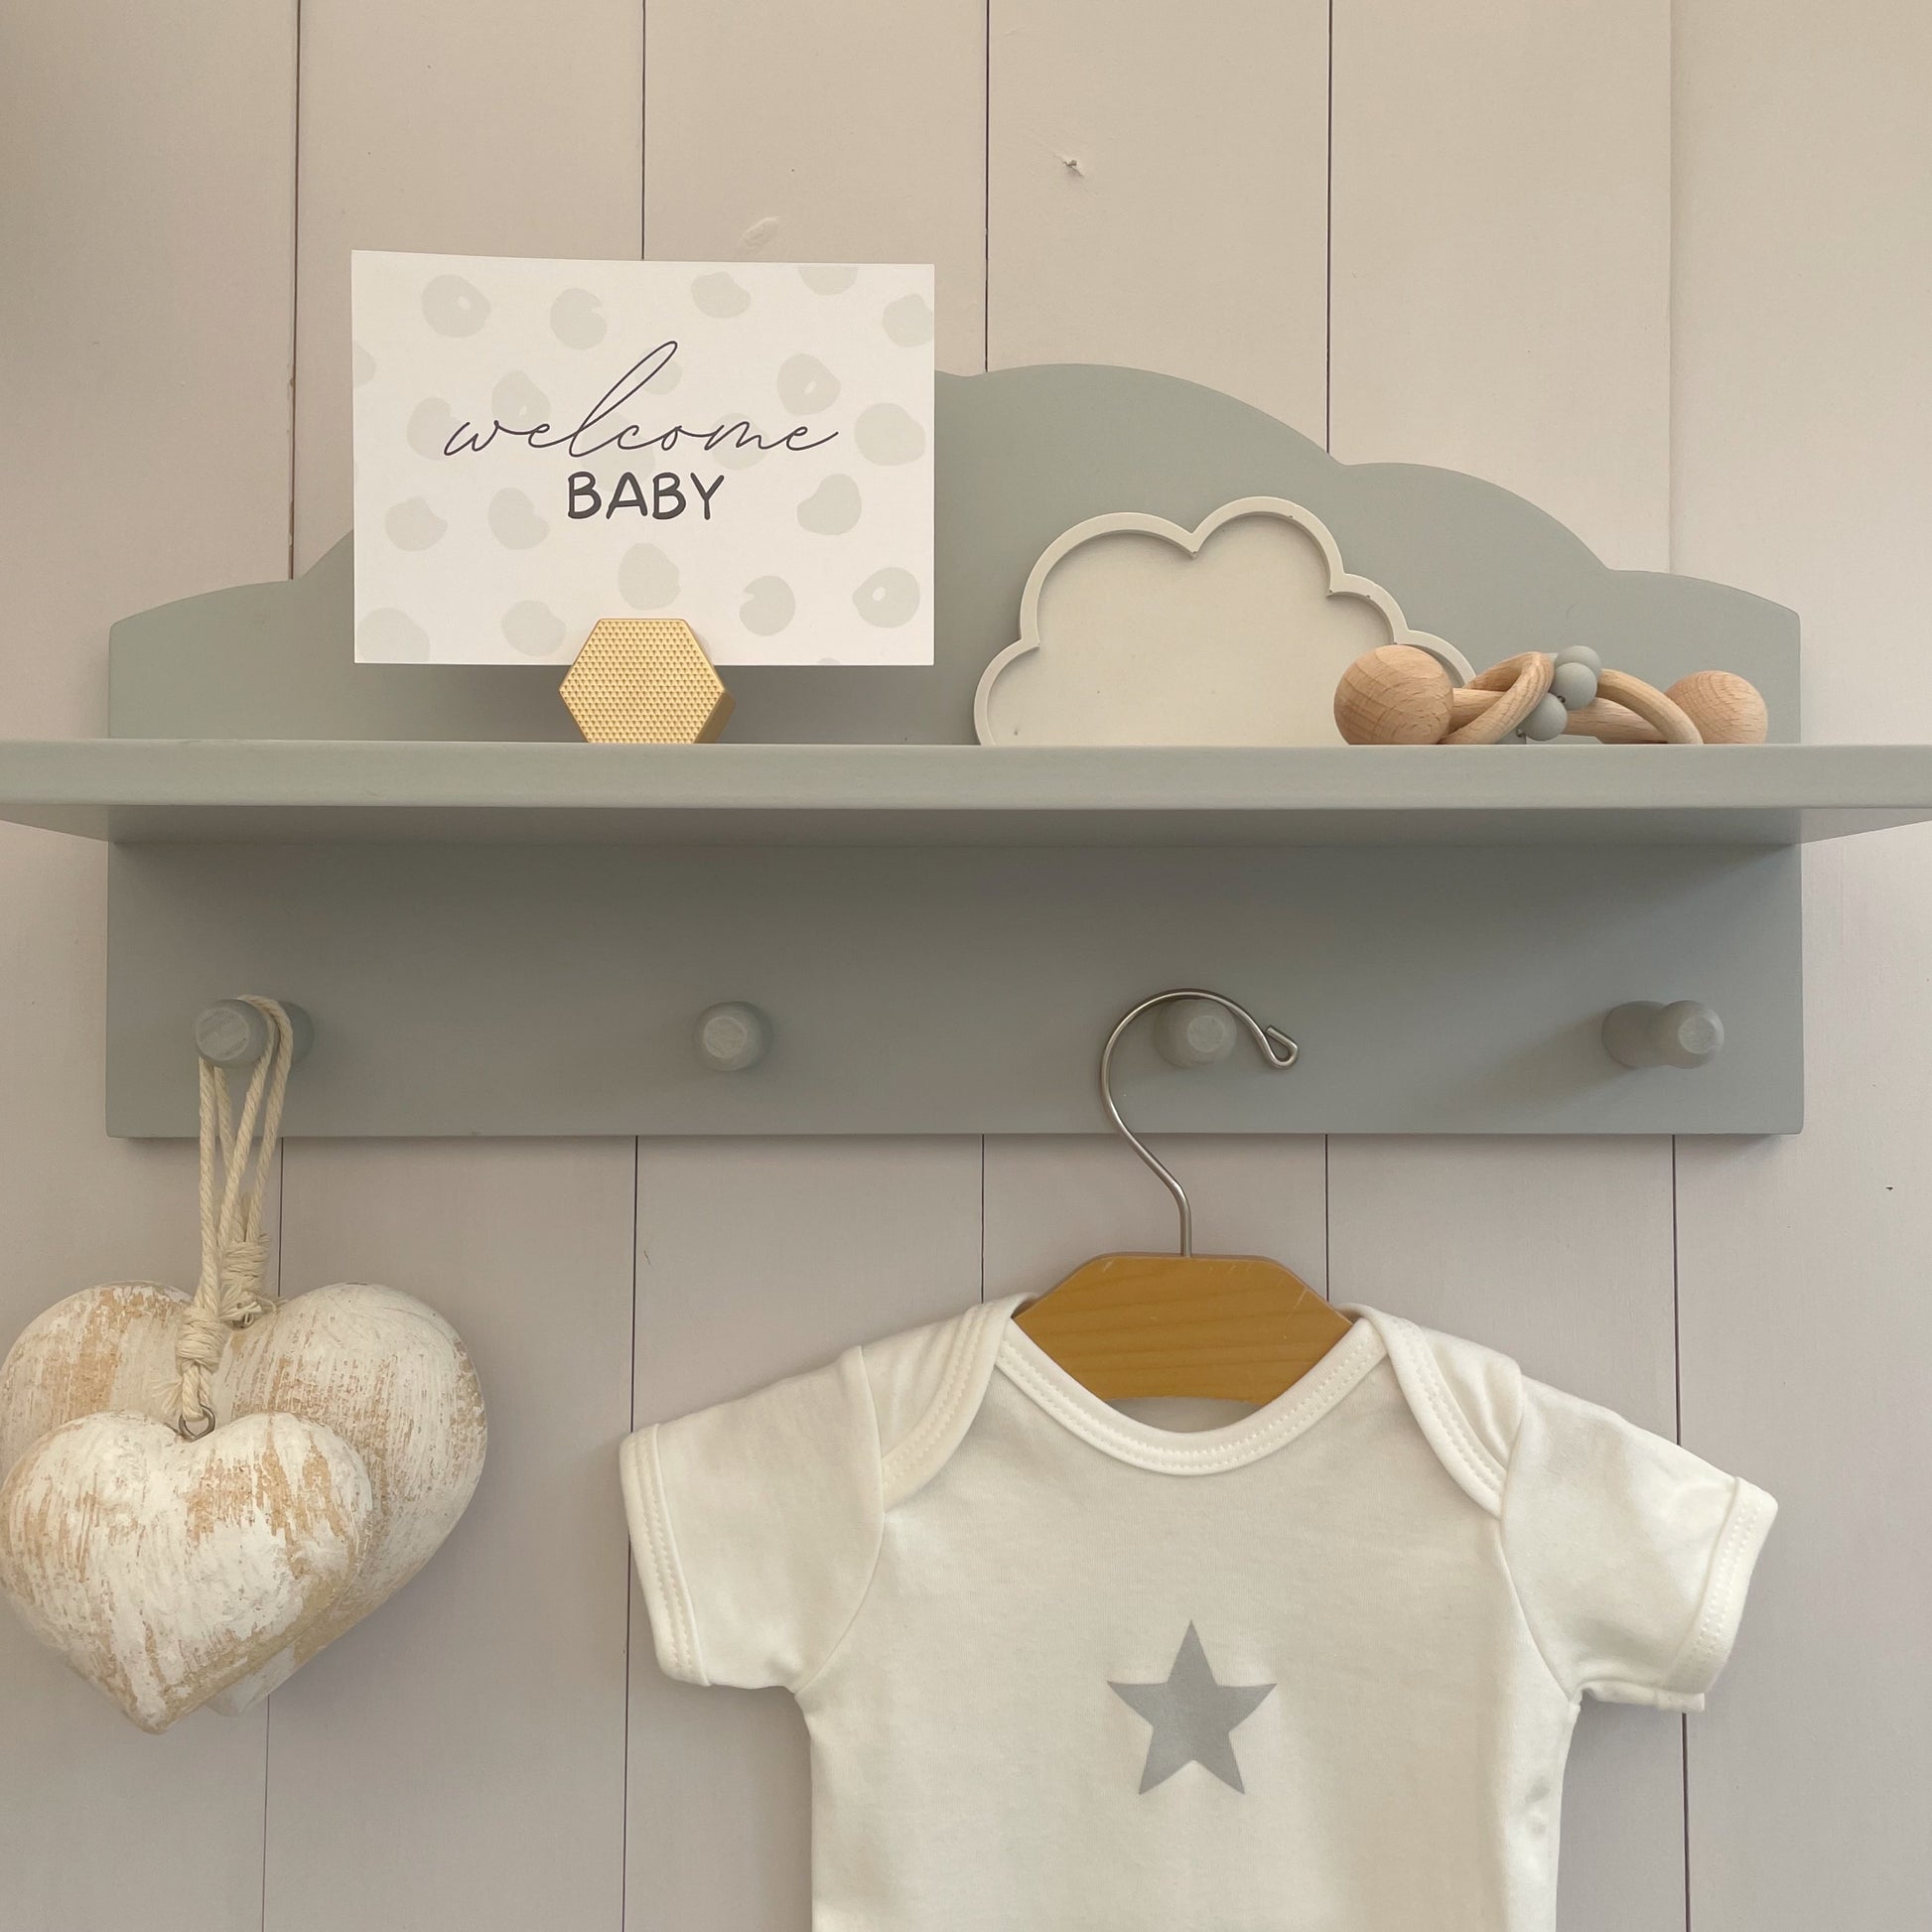 single star dungaree with adrestiasrevolt.co.uk baby nursery decor neutral home decor tones  - @adrestiasrevolt. welcome baby nursery 